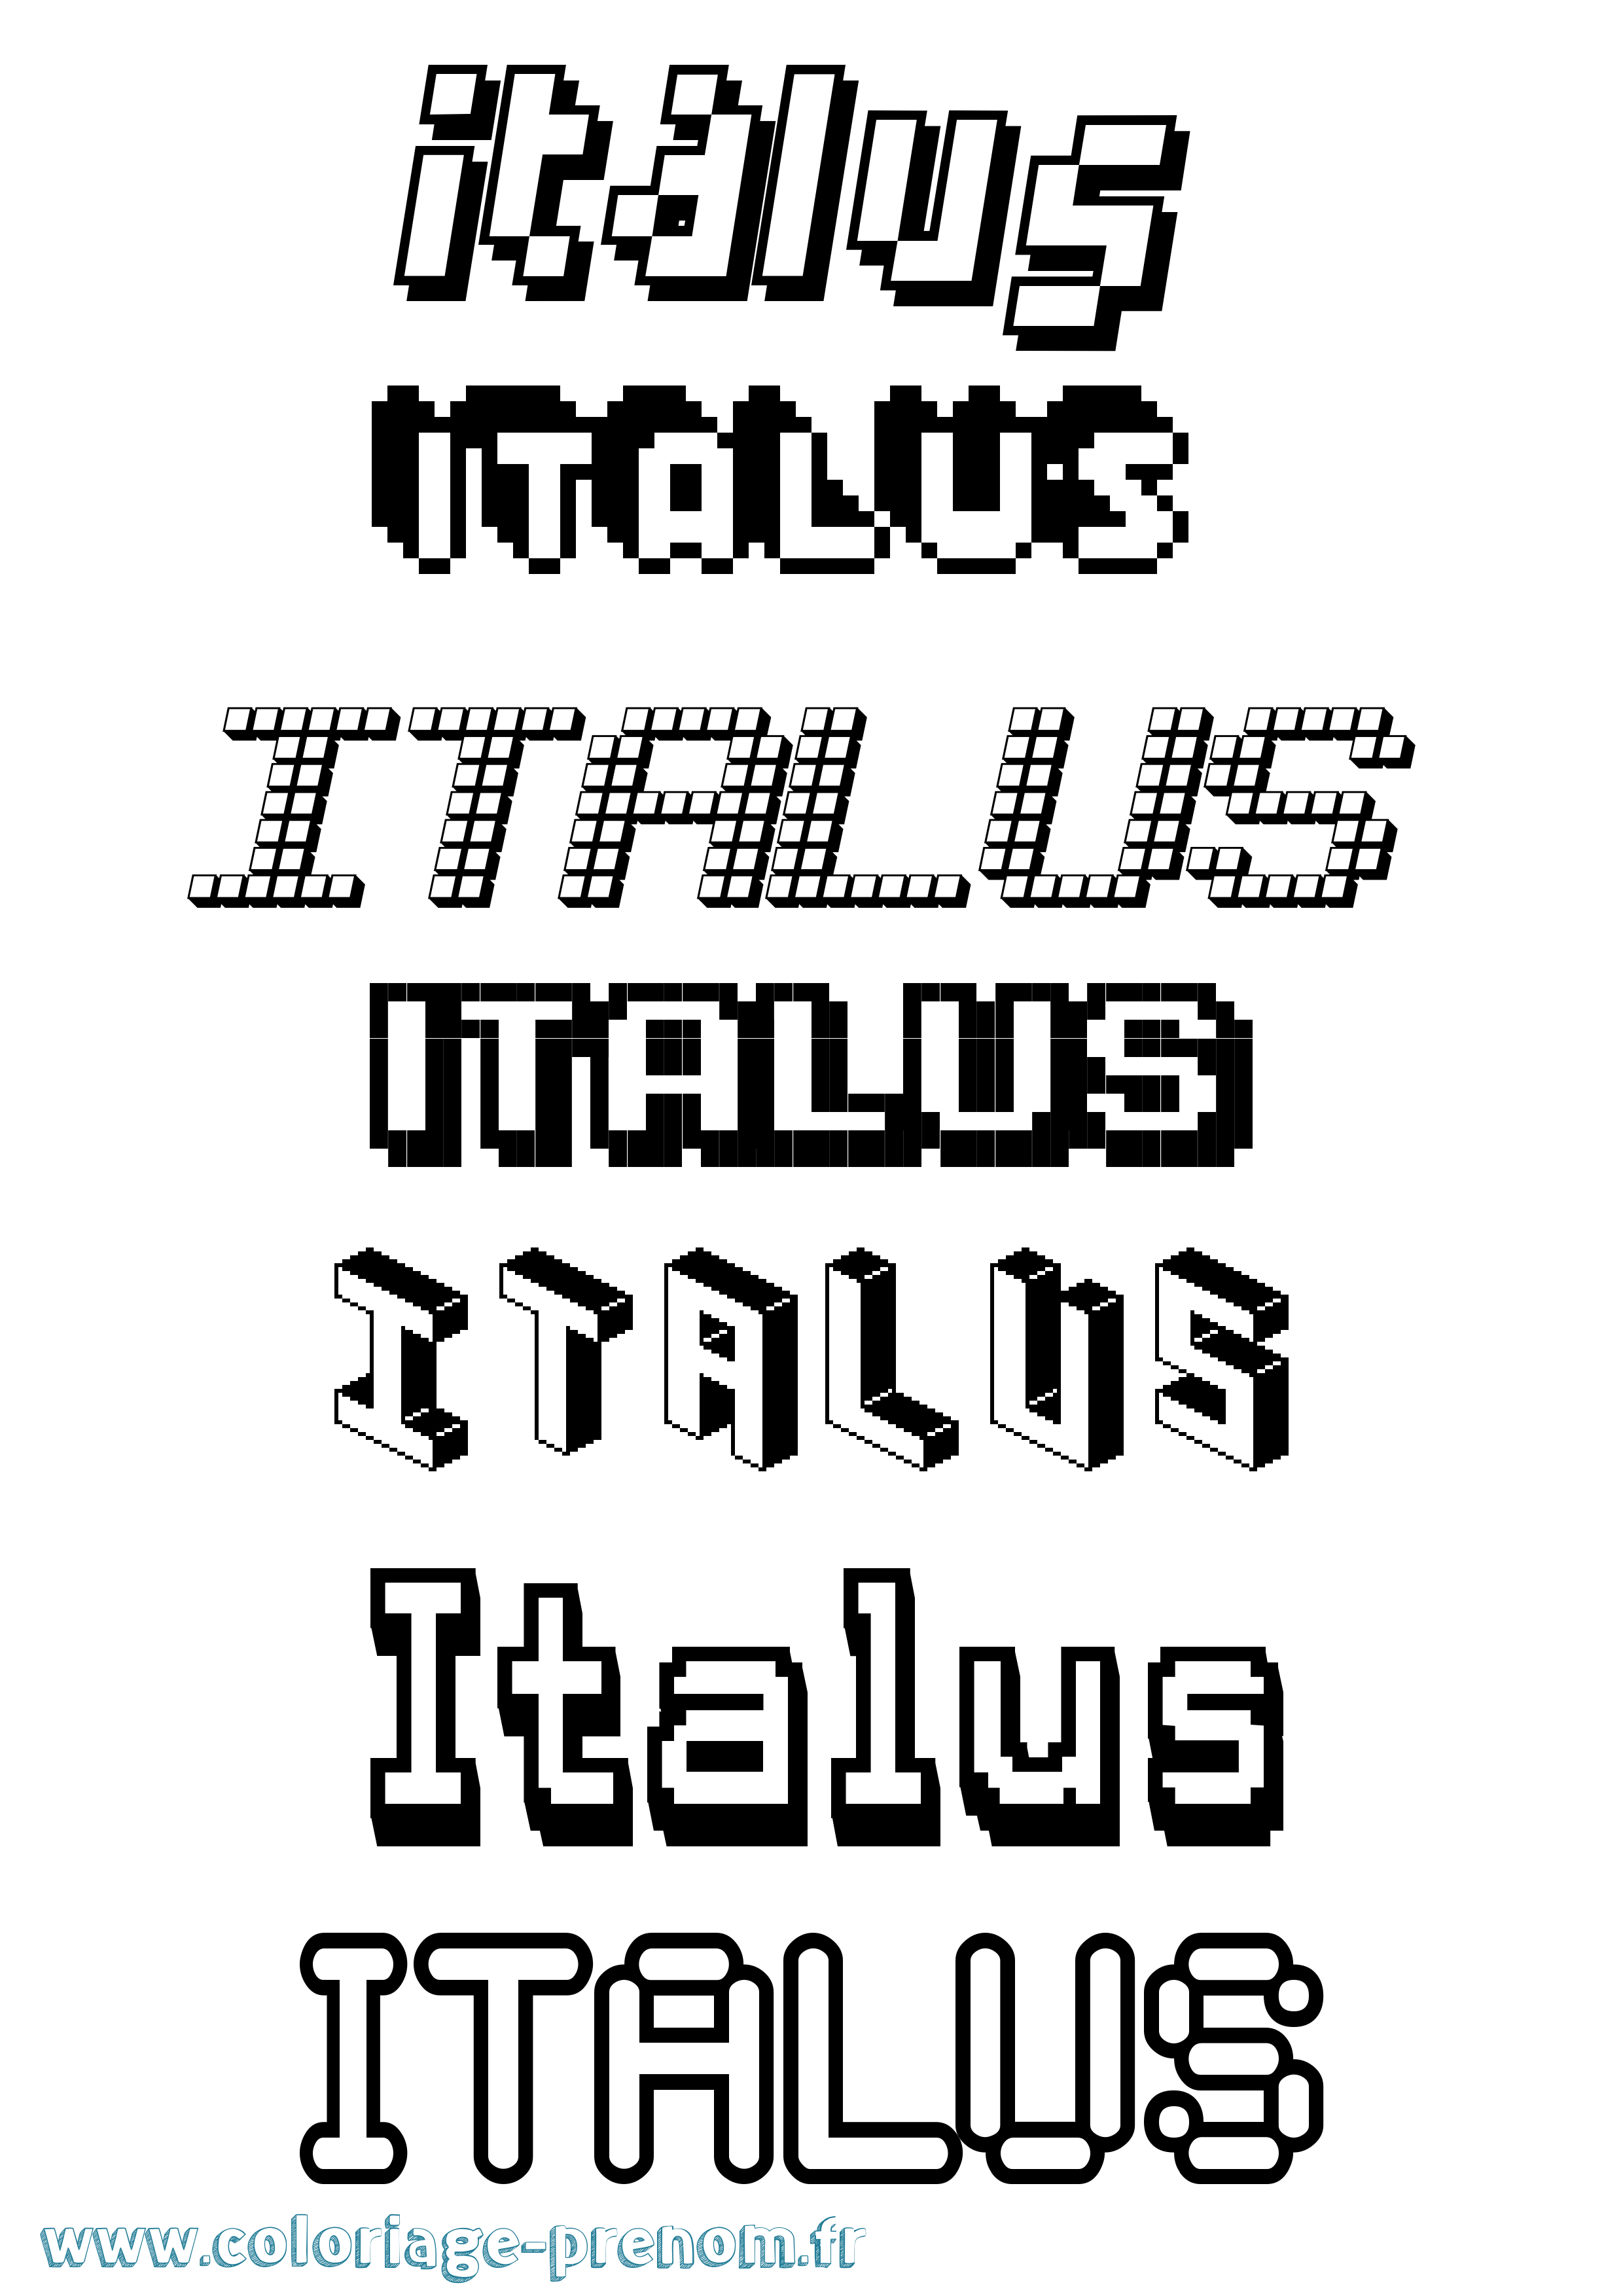 Coloriage prénom Italus Pixel